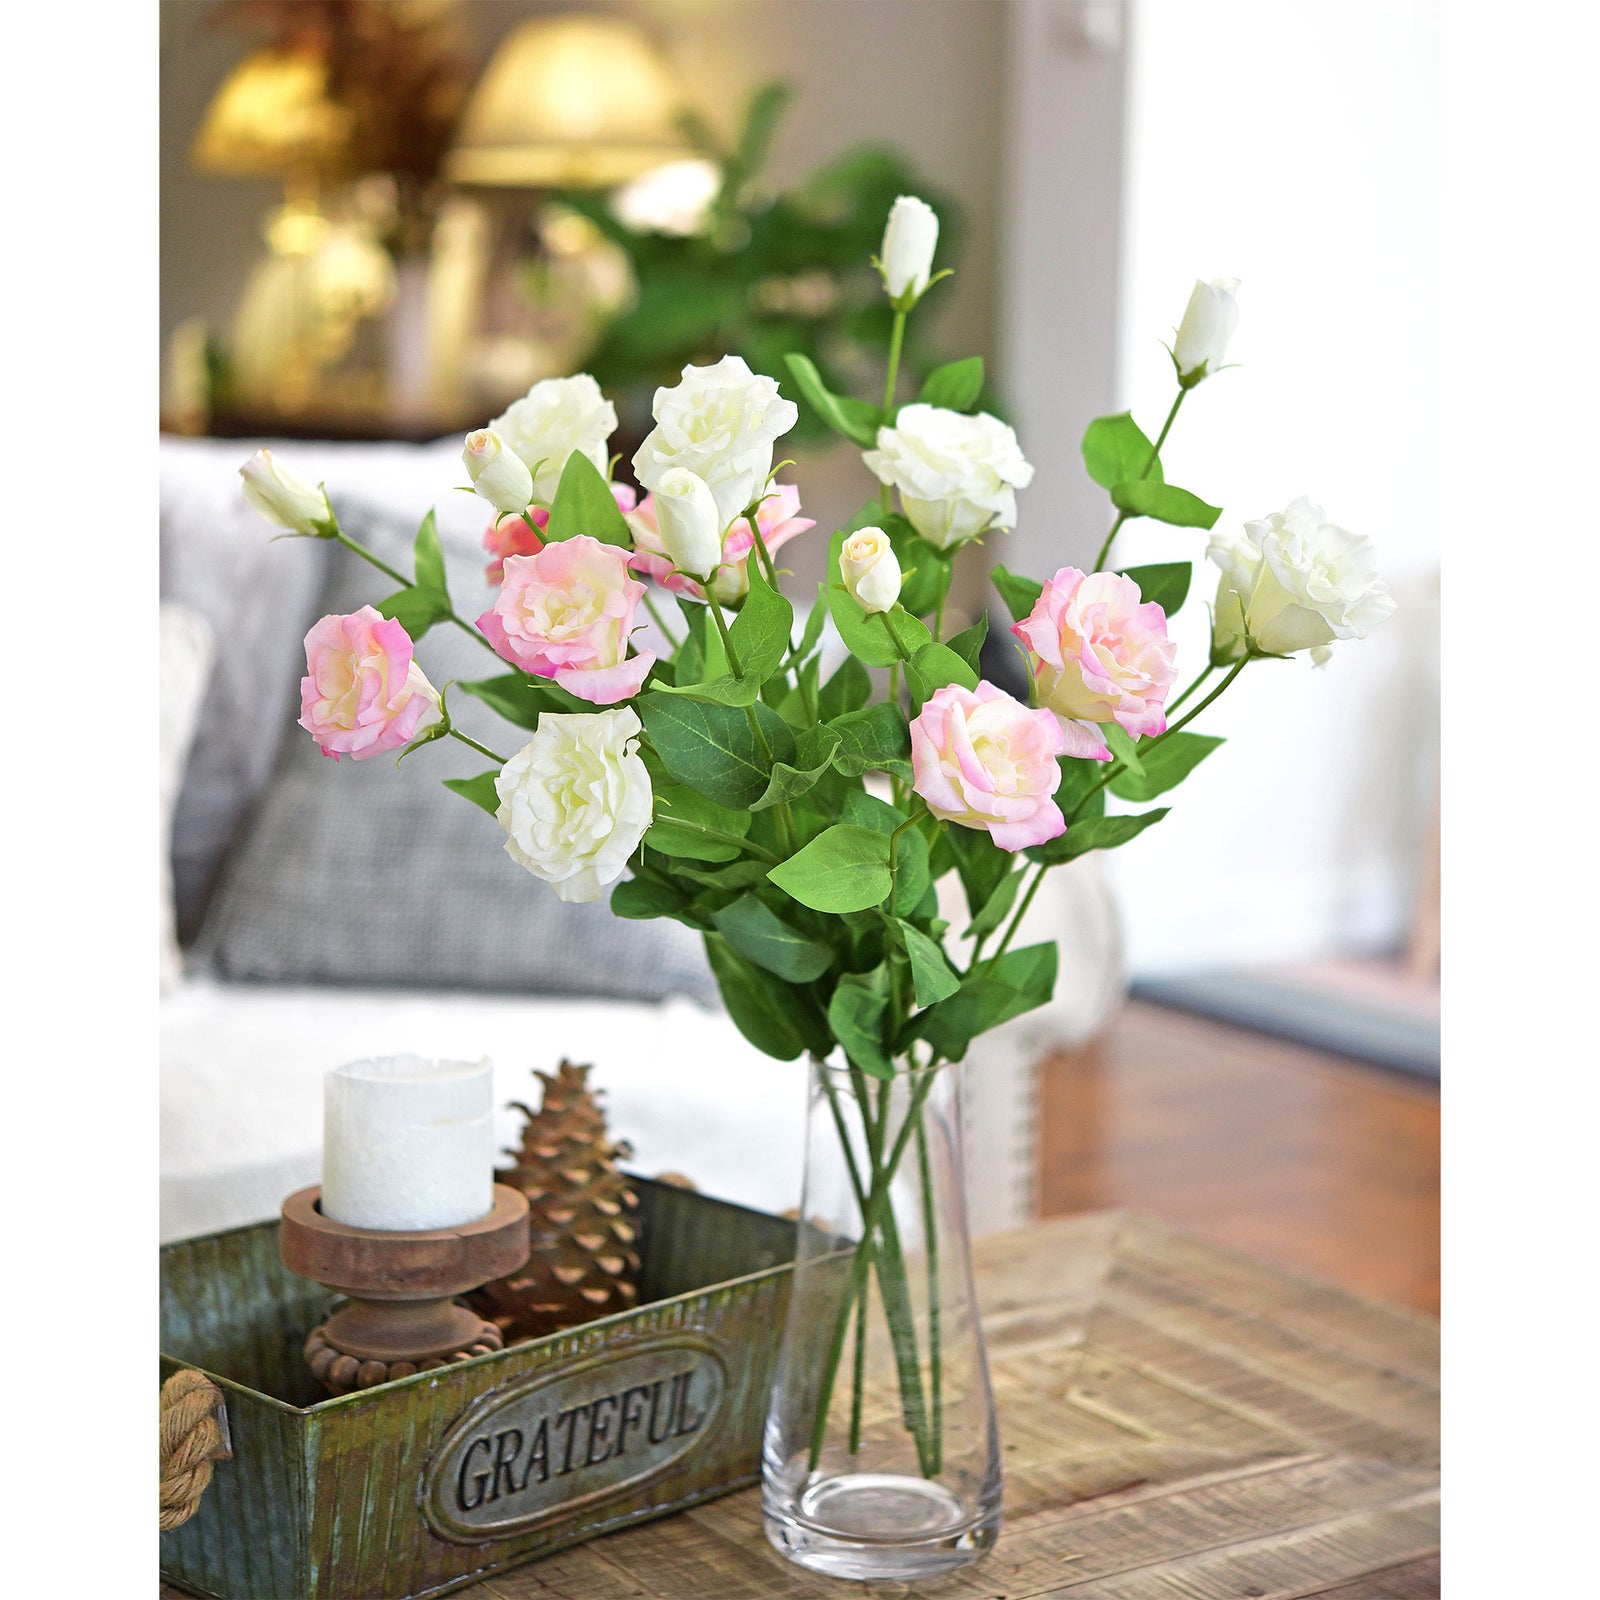 FiveSeasonStuff Real Touch Light Rose Pink Lisianthus Artificial Flowers Tall Long Stems 58cm 3 Stems